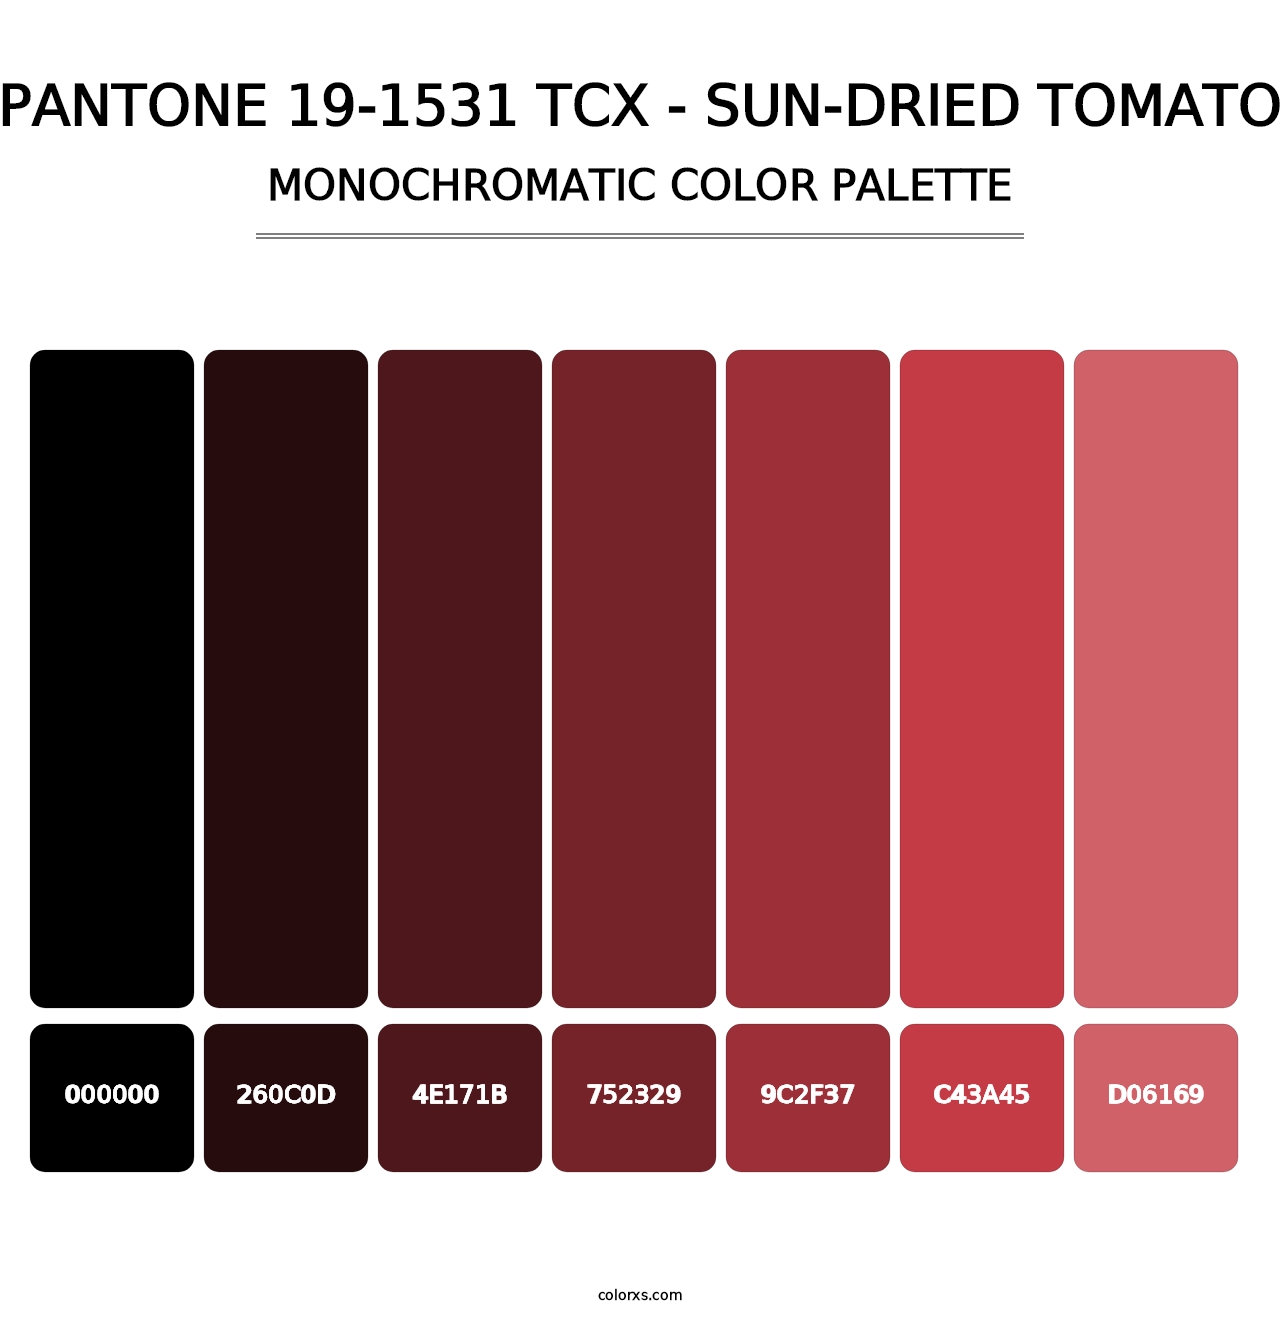 PANTONE 19-1531 TCX - Sun-Dried Tomato - Monochromatic Color Palette